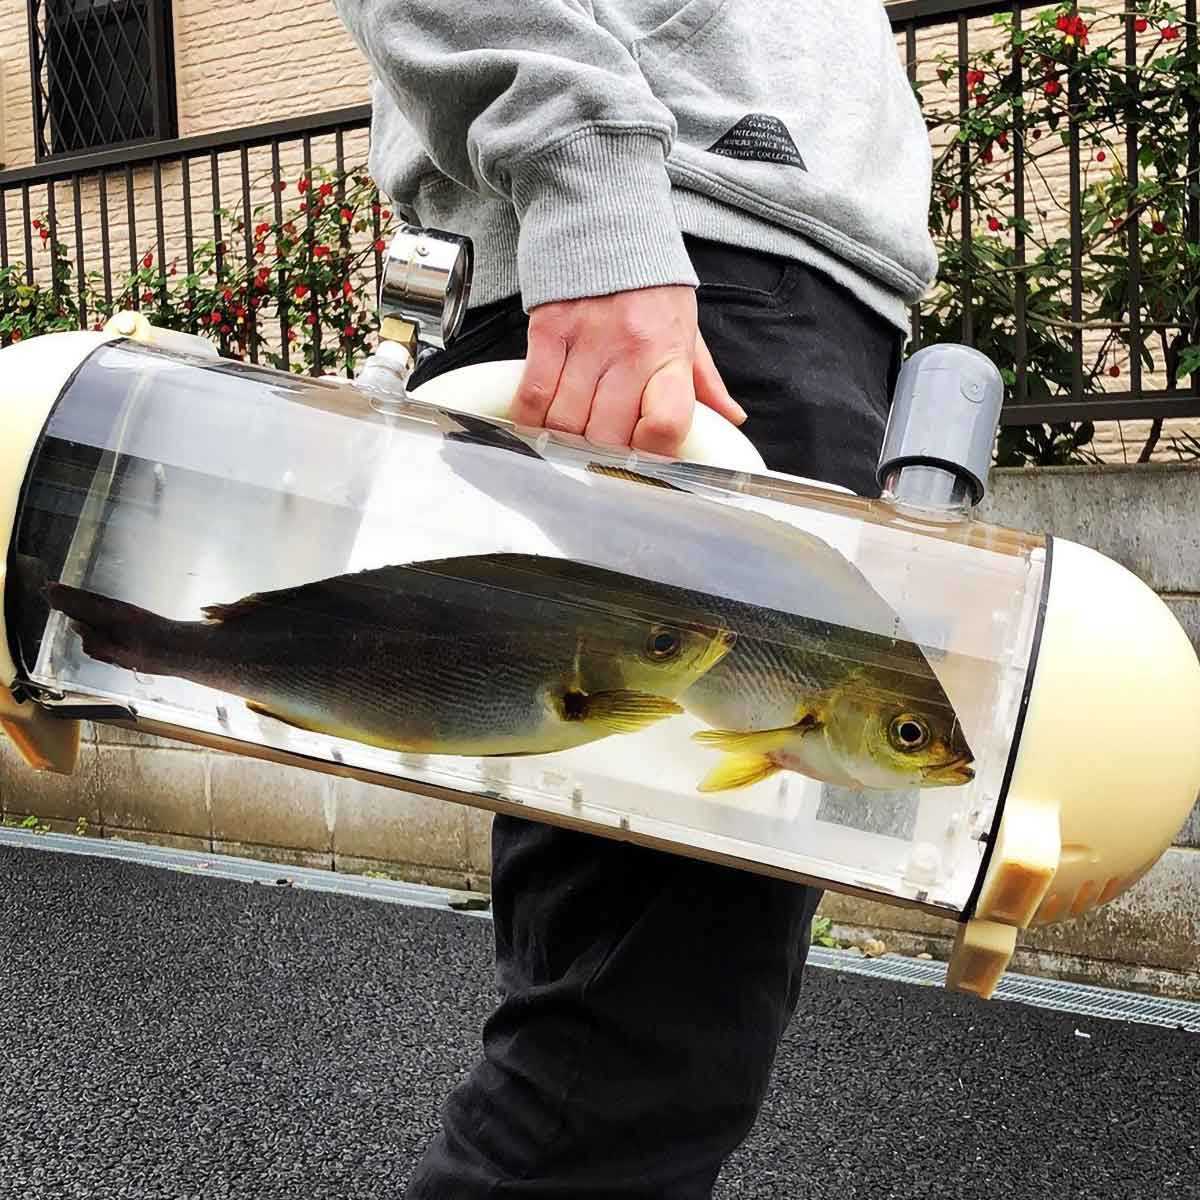 https://luxurylaunches.com/wp-content/uploads/2021/05/Katsugyo-Bag-Live-Fish-Carrier-Bag-2.jpg